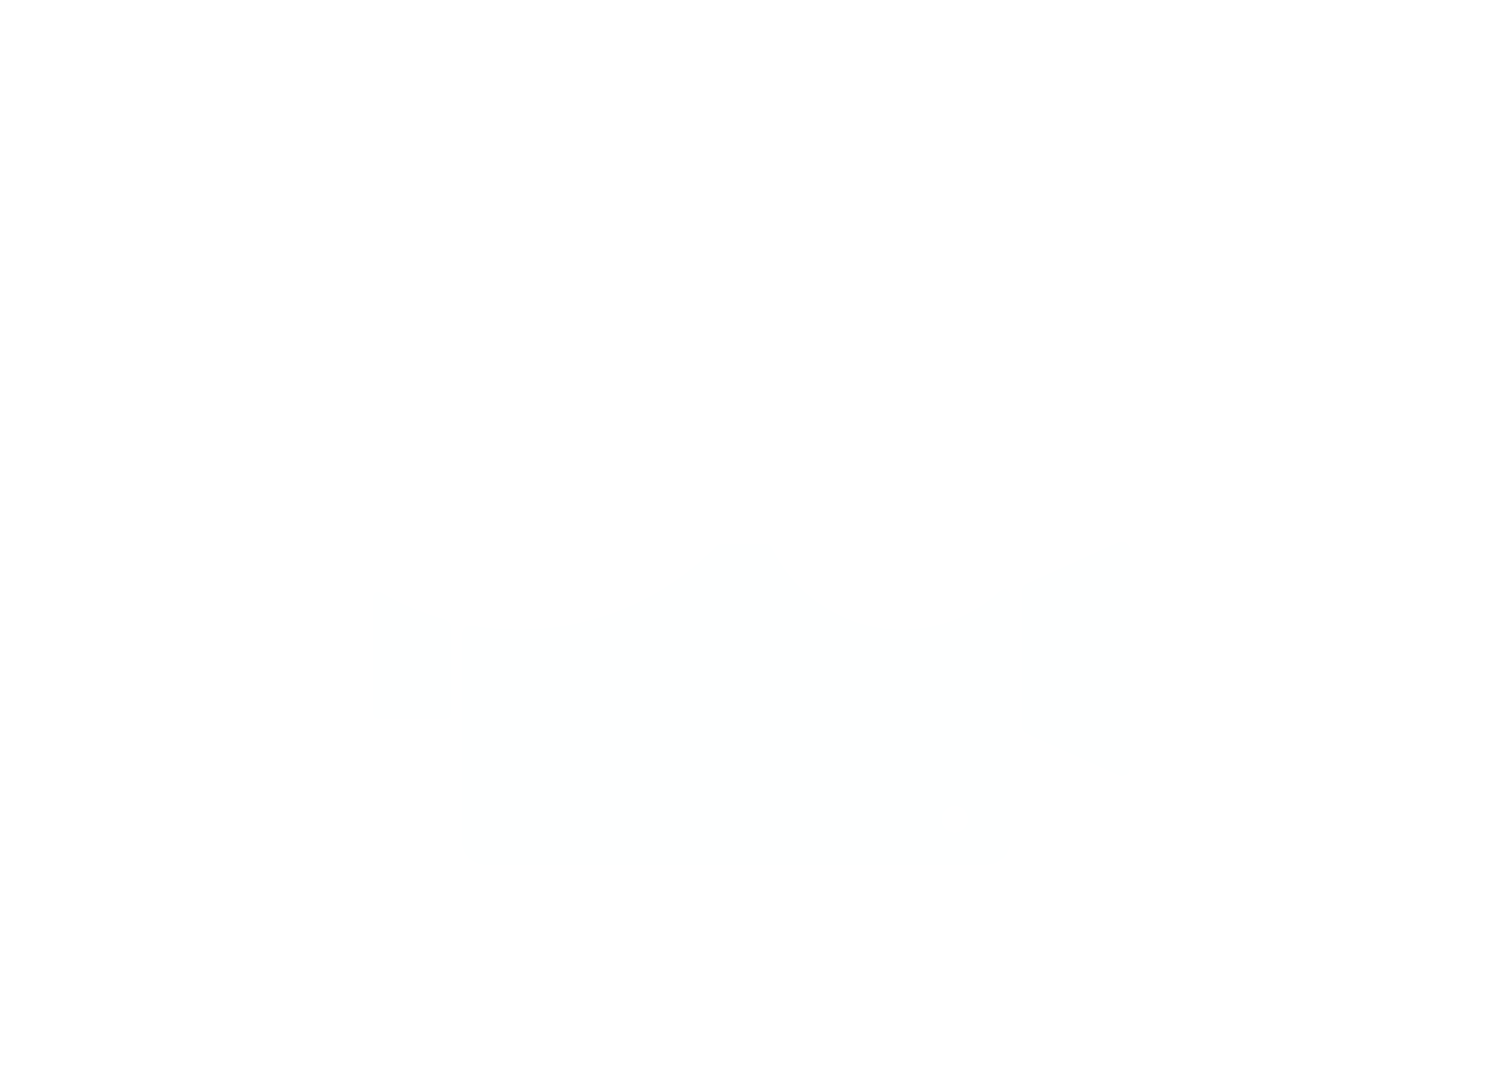 CHENG CHENG FILMS